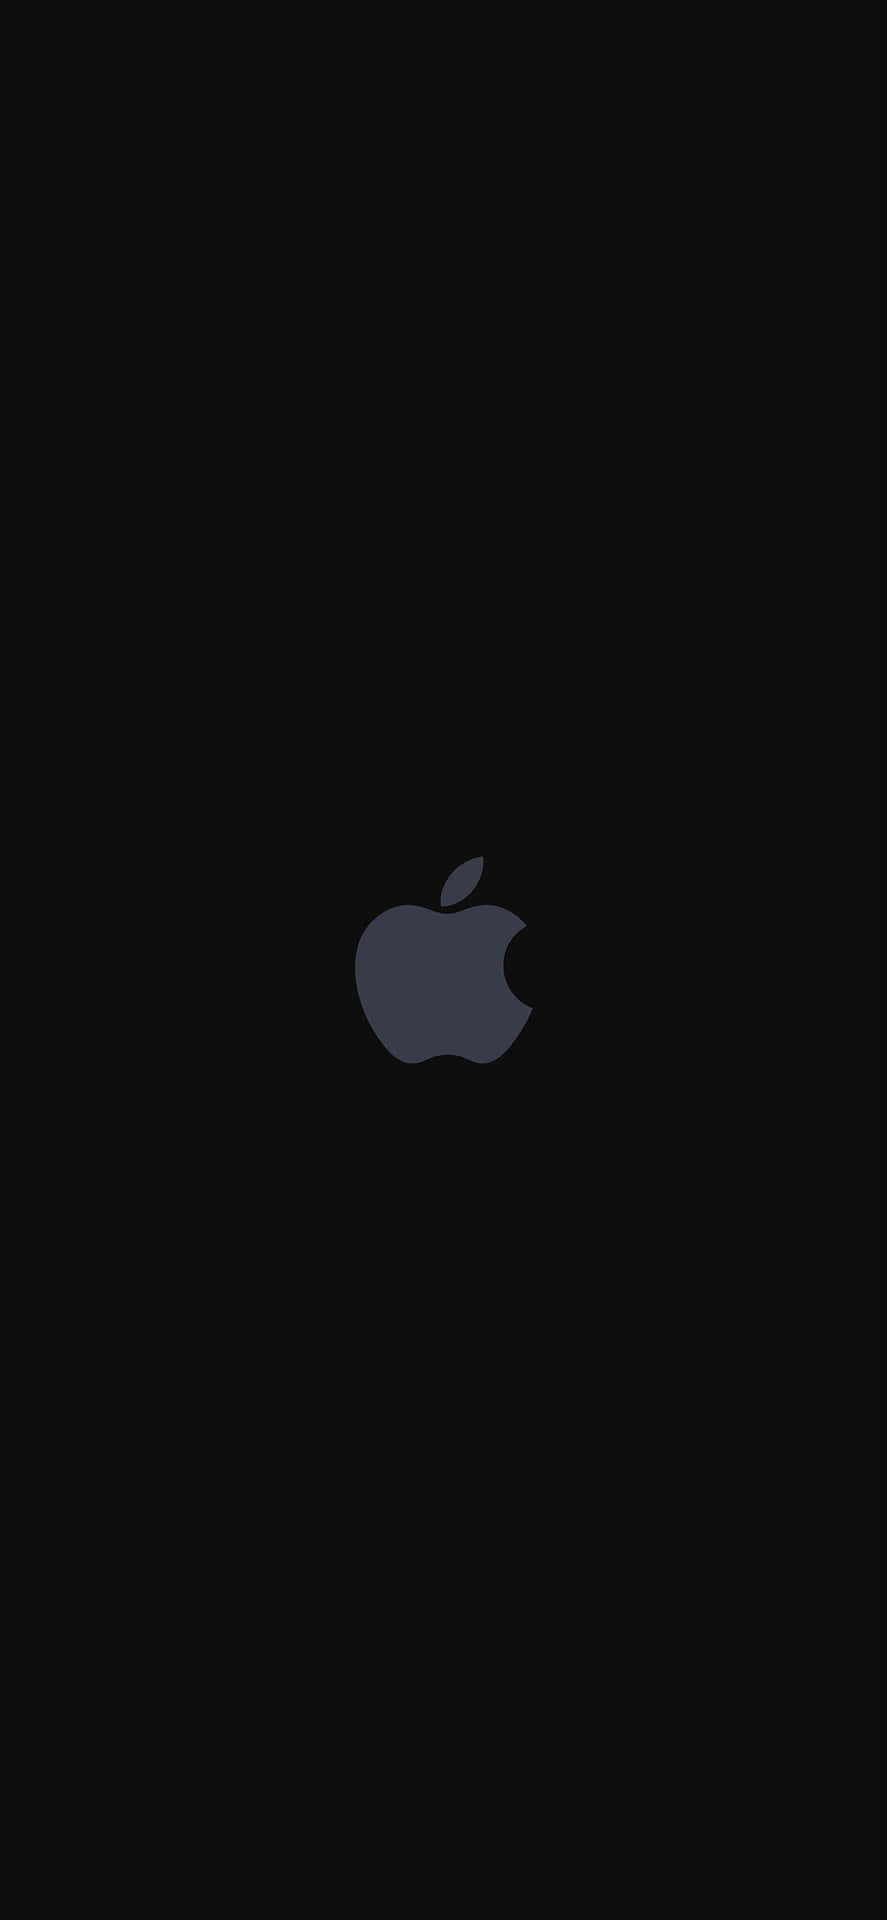 Sleek Apple Macbook On Wooden Table